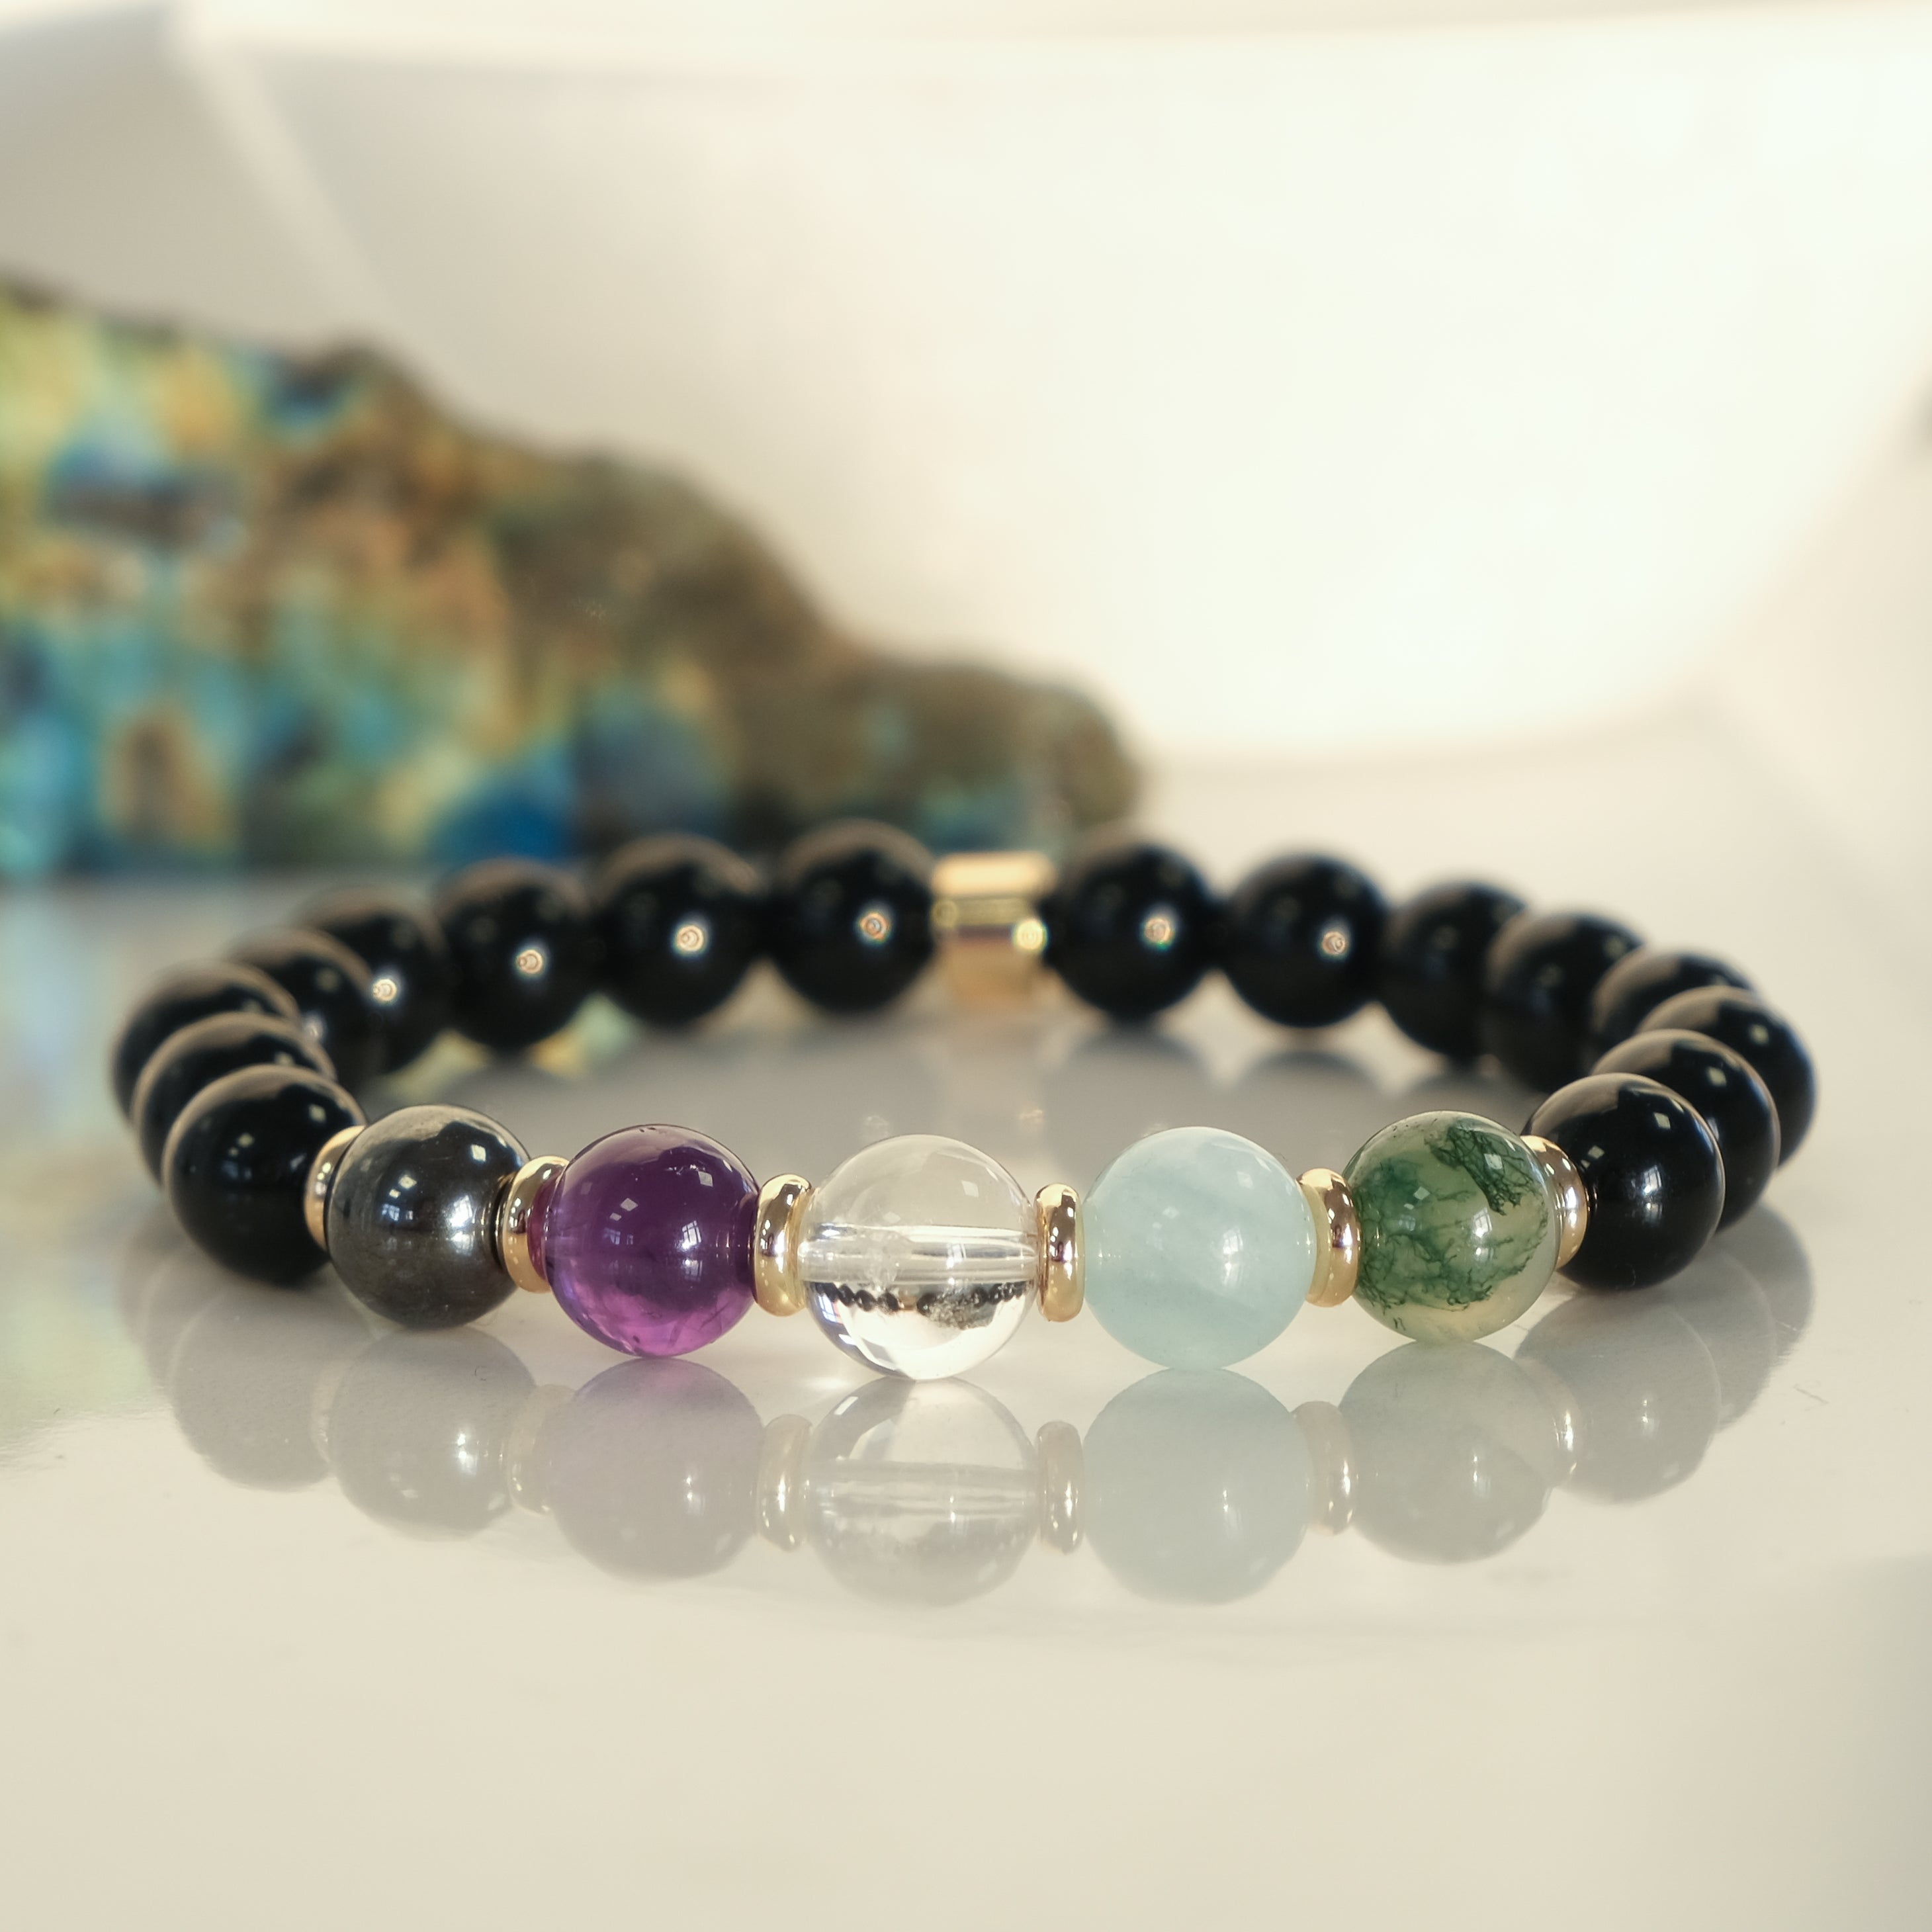 Aquarius zodiac crystal bracelet with gold accessories